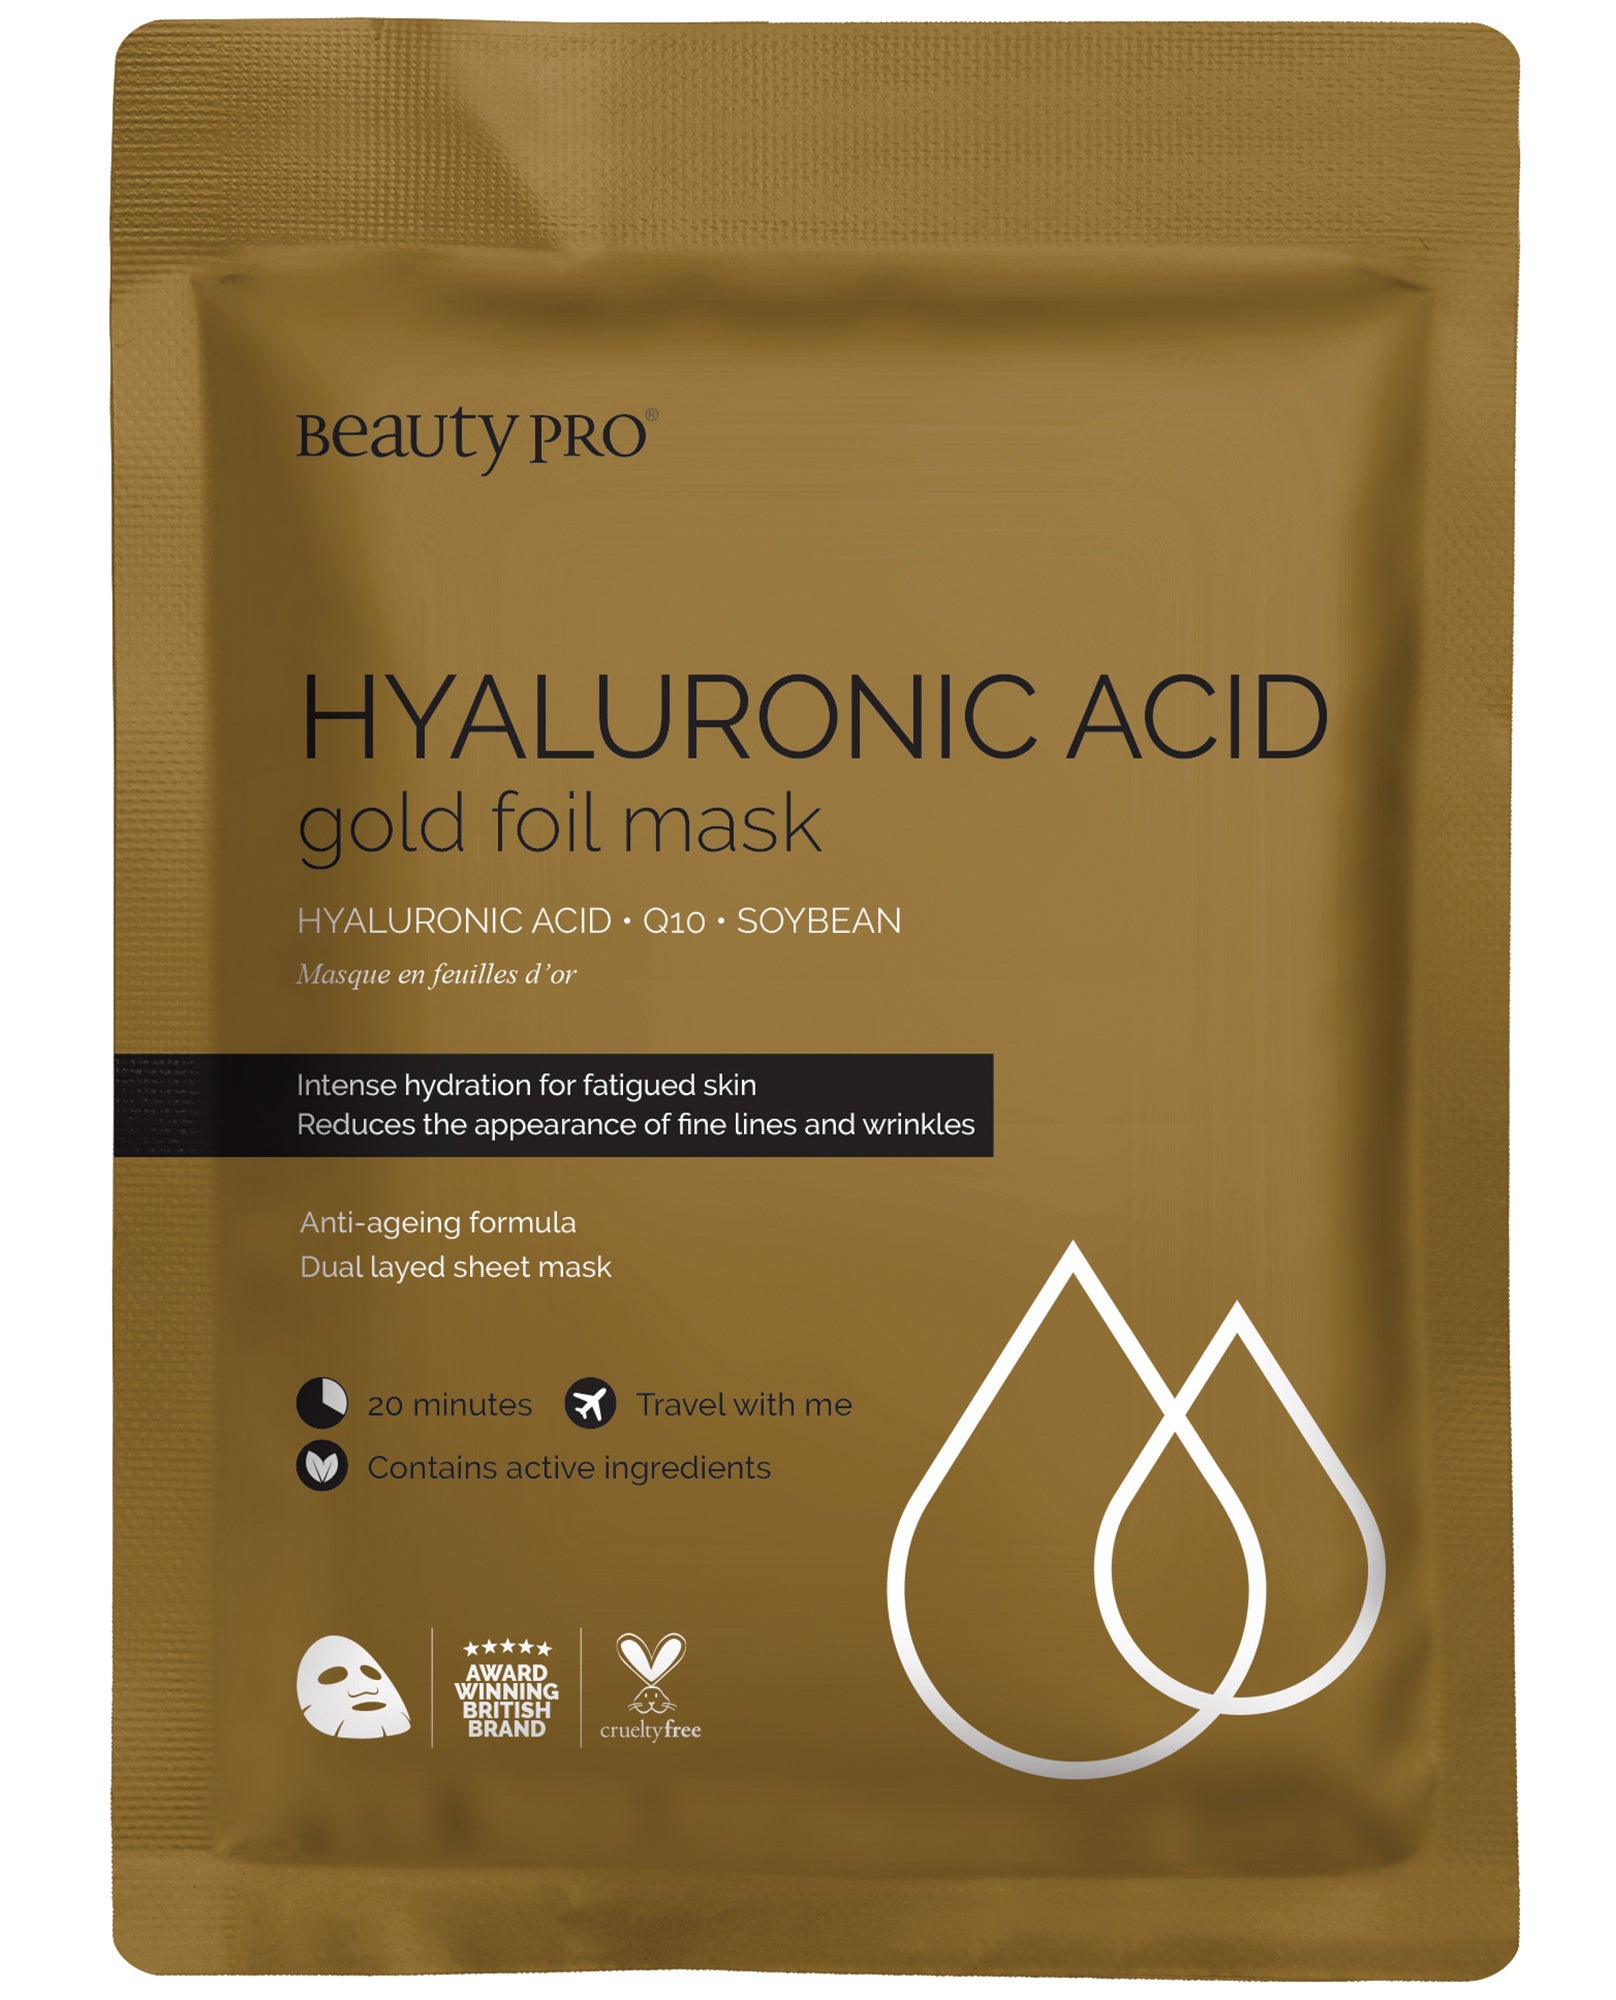 Beauty Pro Hyaluronic Acid Gold Foil Mask